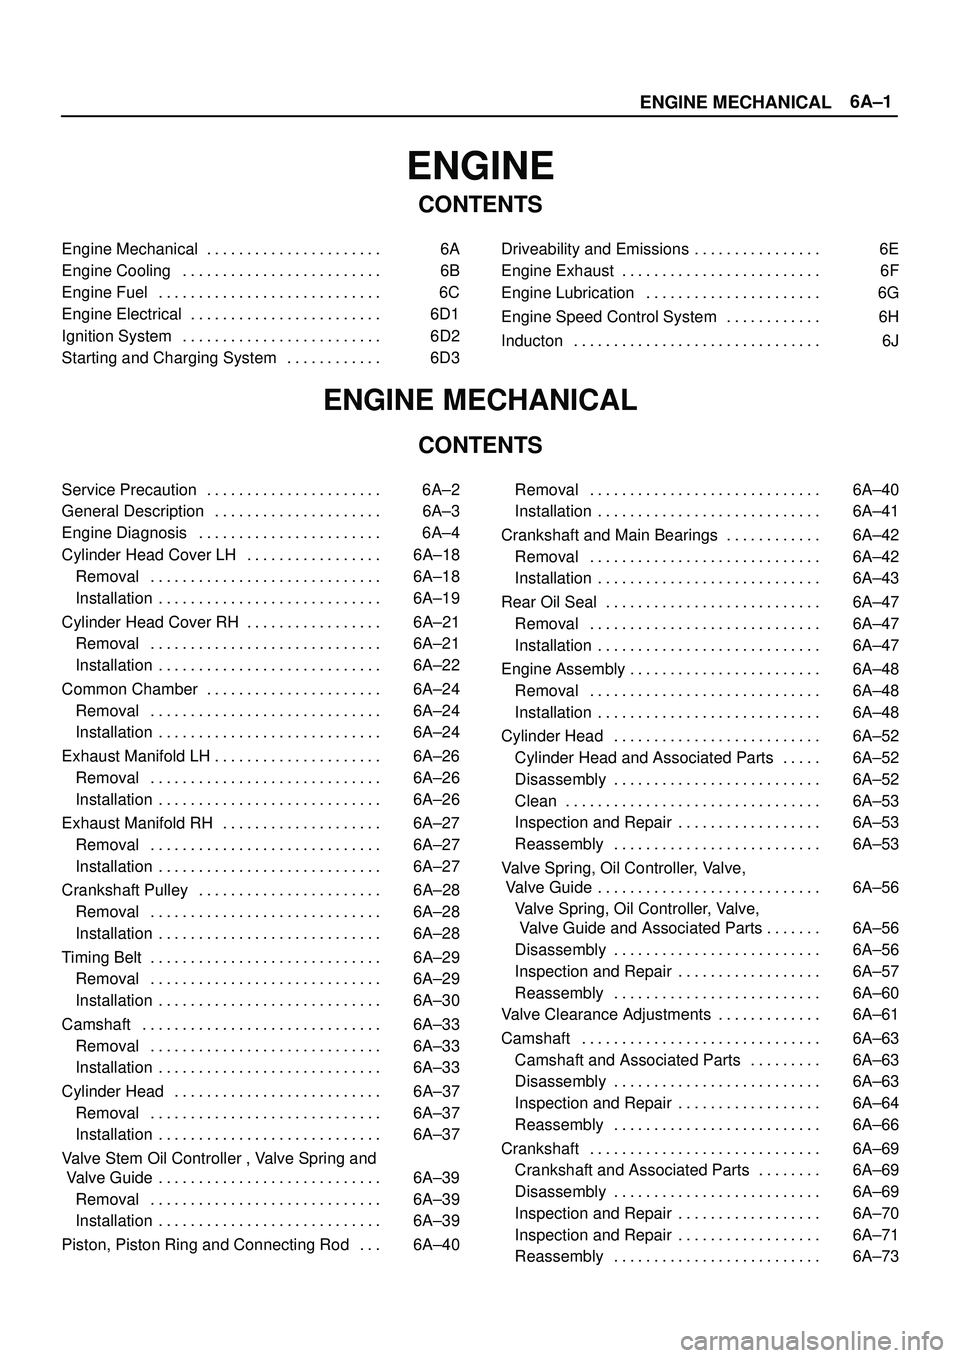 ISUZU TROOPER 1998  Service Repair Manual 6A±1
ENGINE MECHANICAL
ENGINE
CONTENTS
Engine Mechanical 6A. . . . . . . . . . . . . . . . . . . . . . 
Engine Cooling 6B. . . . . . . . . . . . . . . . . . . . . . . . . 
Engine Fuel 6C. . . . . . .